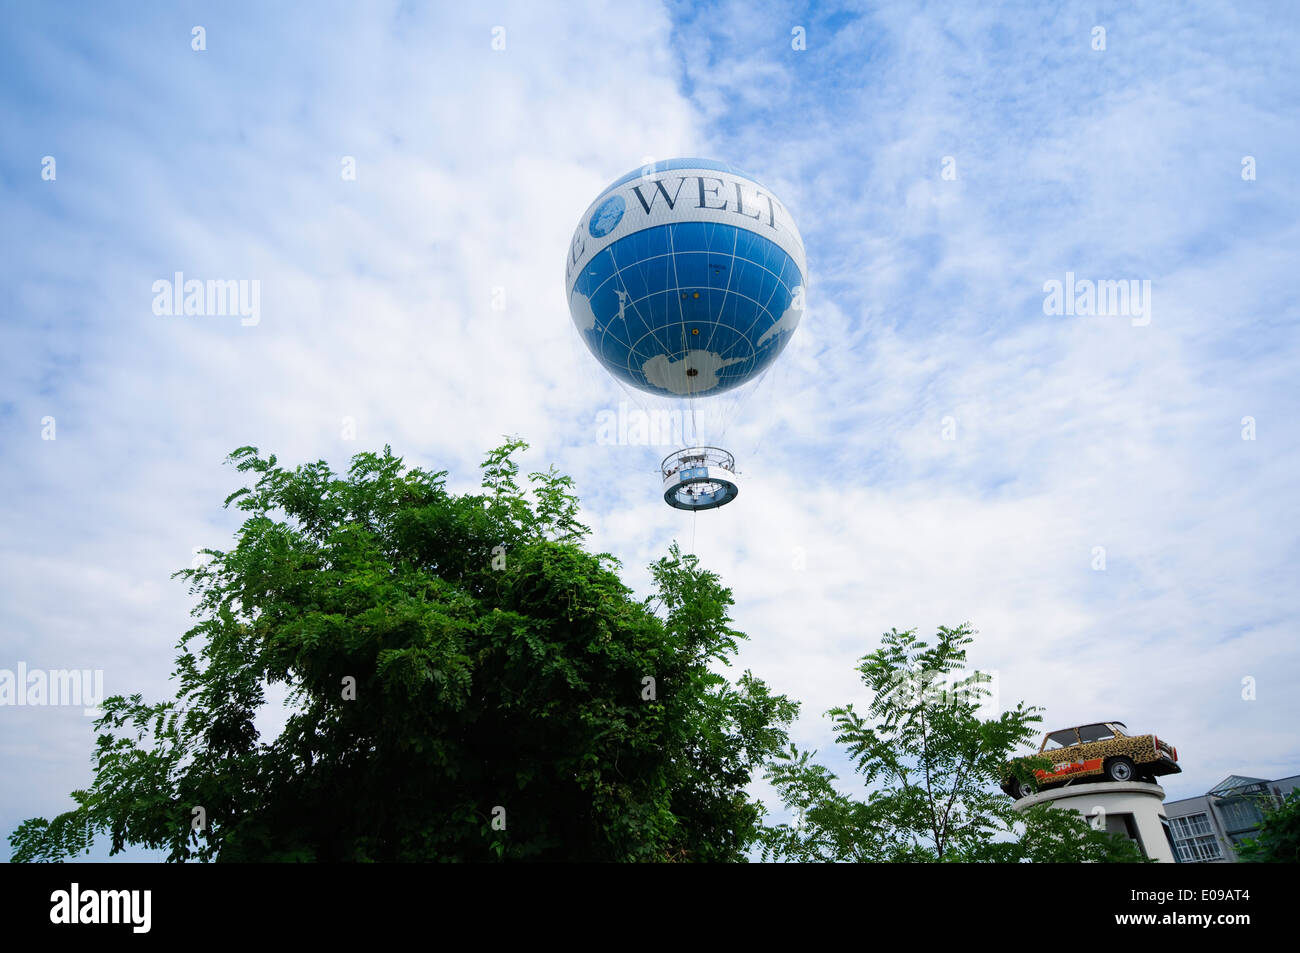 Sightseeing Ballon Stockfotos und -bilder Kaufen - Alamy